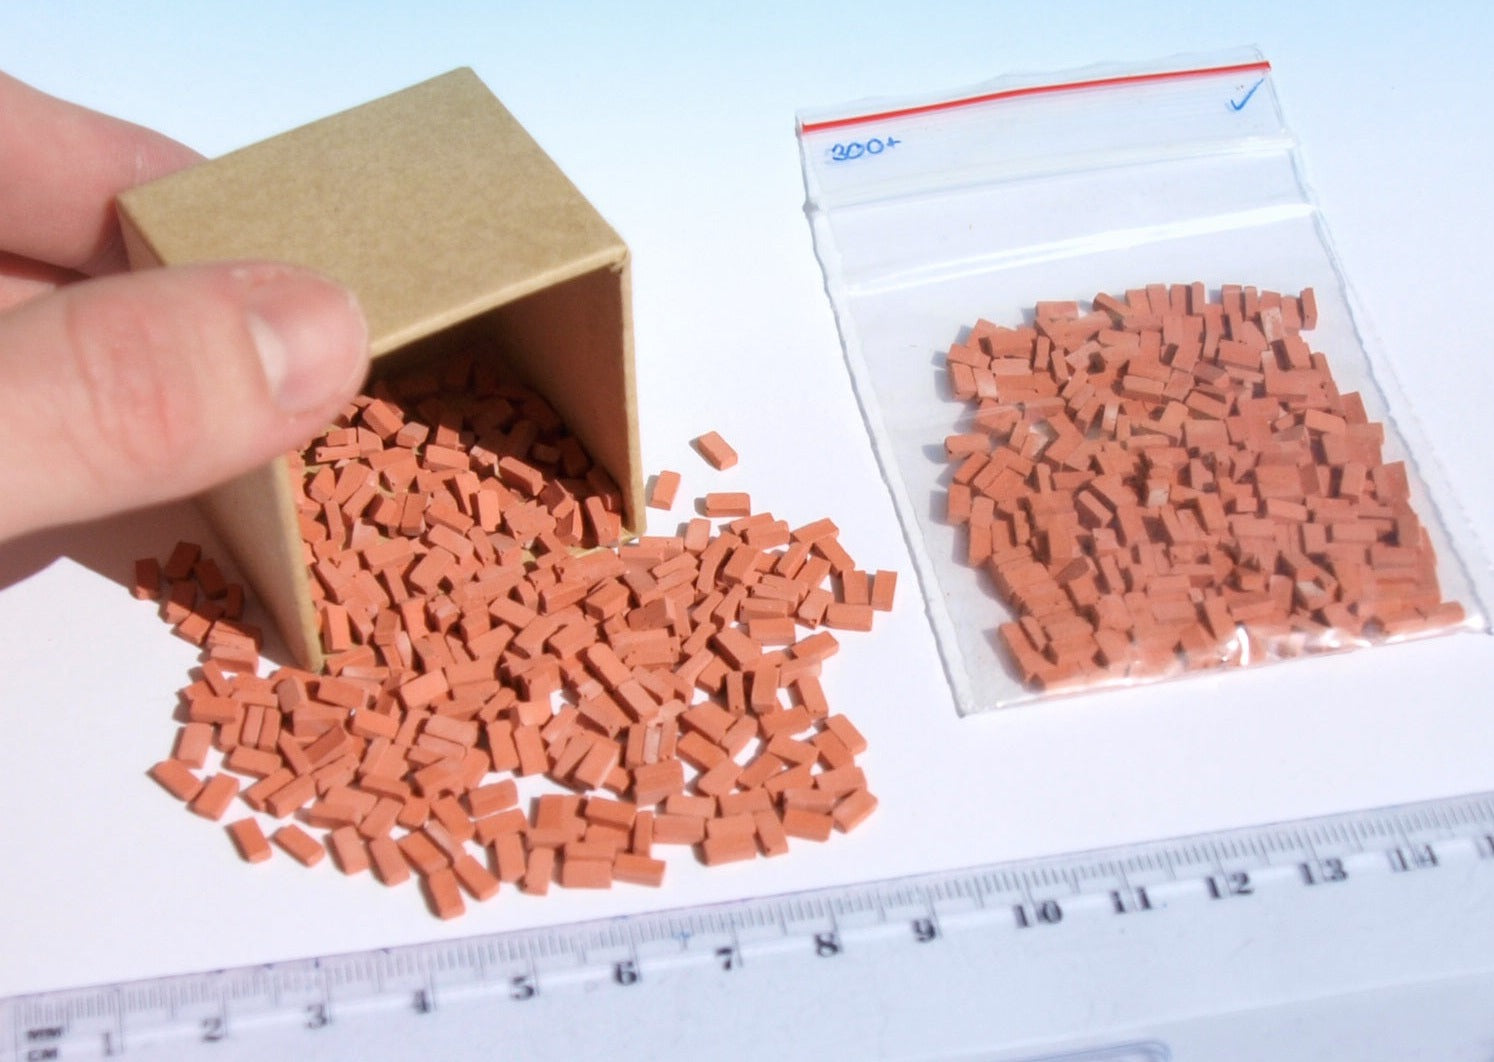 naaron88 Red Miniature Bricks O scale 1:48 for dollhouse model building –  Naaron88 Miniatures